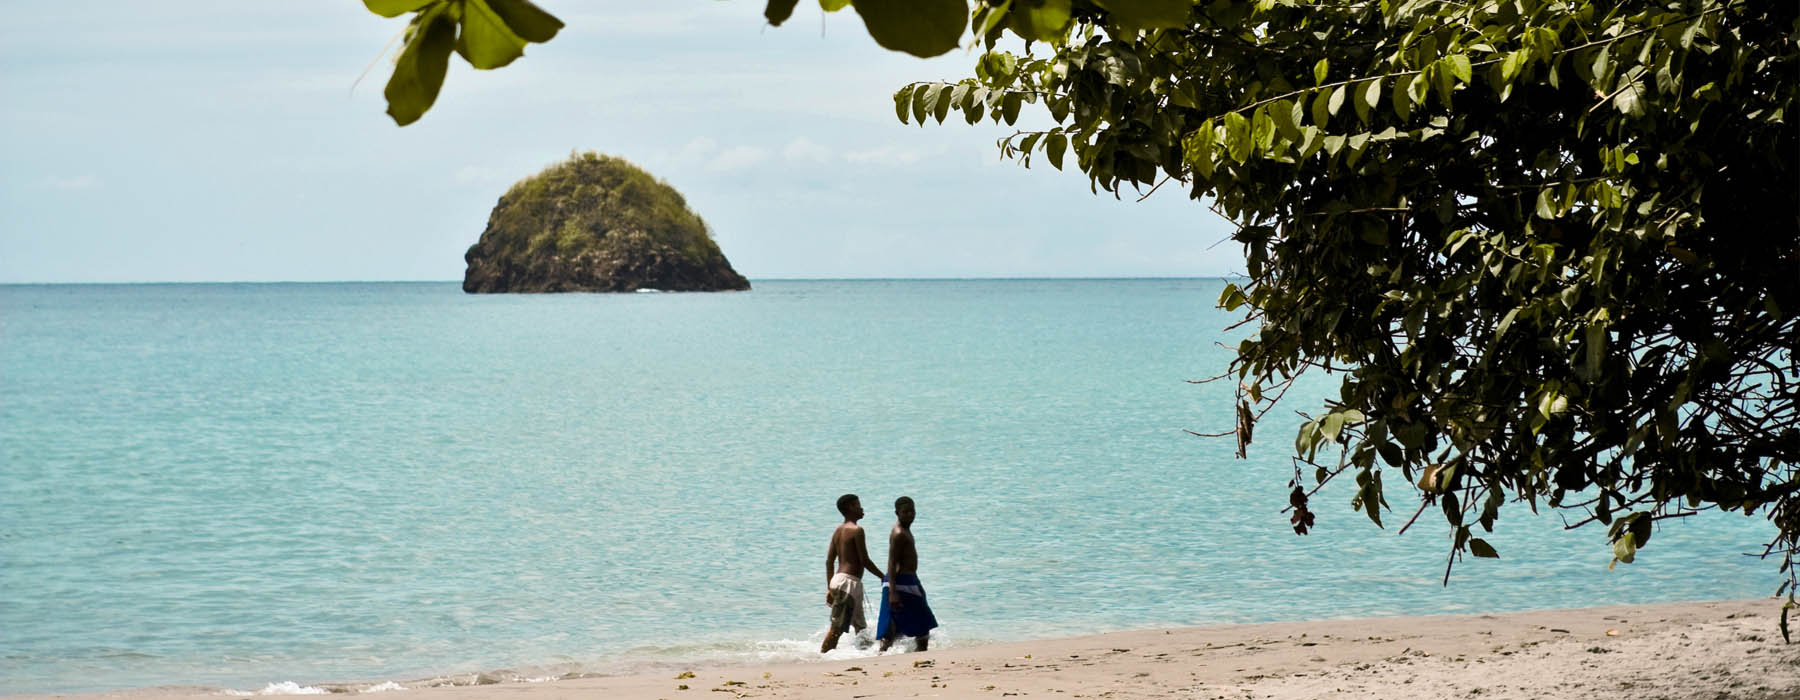 Voyages de noces Martinique